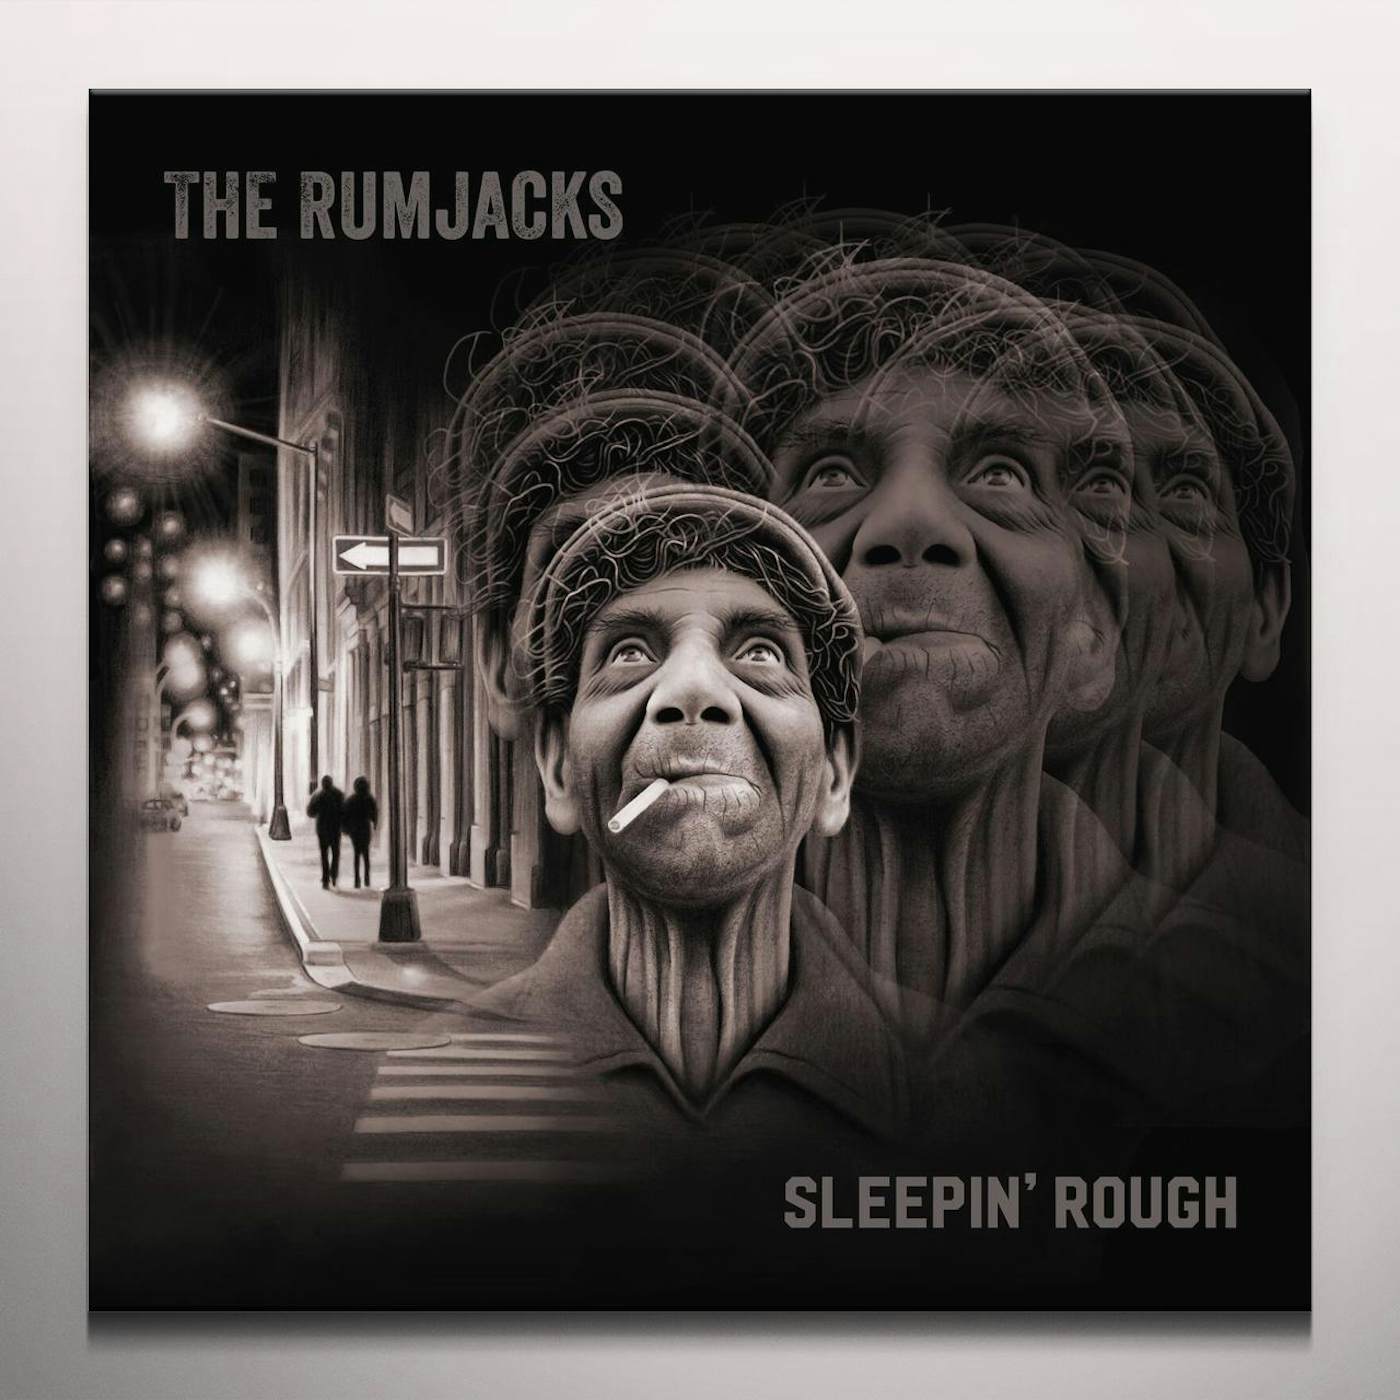 The Rumjacks Sleepin' Rough Vinyl Record